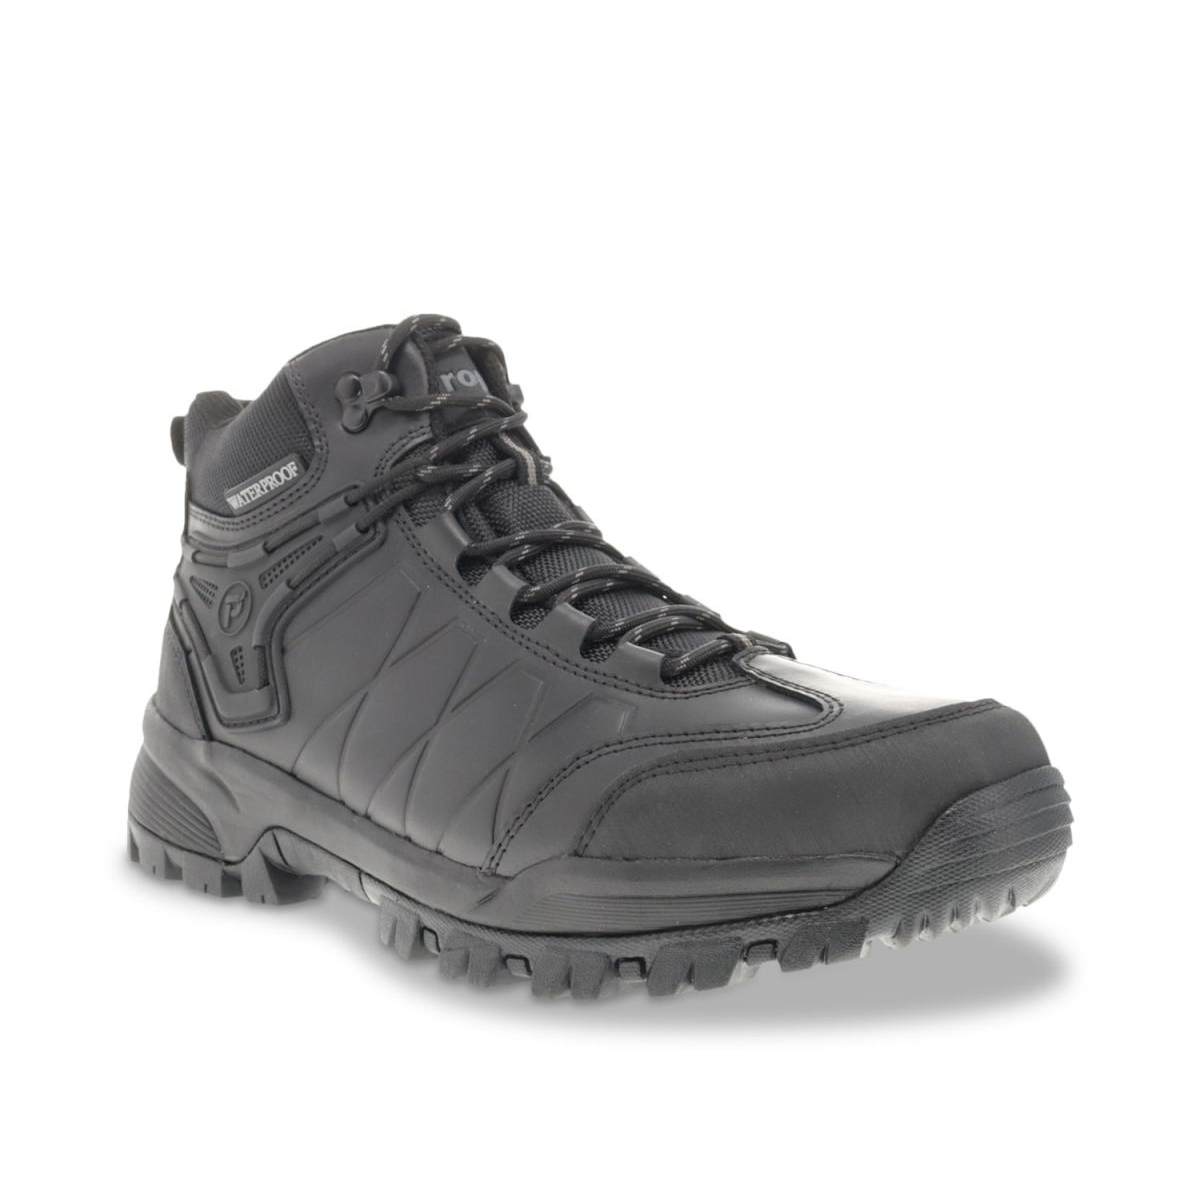 Propet Men's Ridge Walker Force Hiking Boots Black - MBA052LBLK BLACK - BLACK, 12 XX-Wide